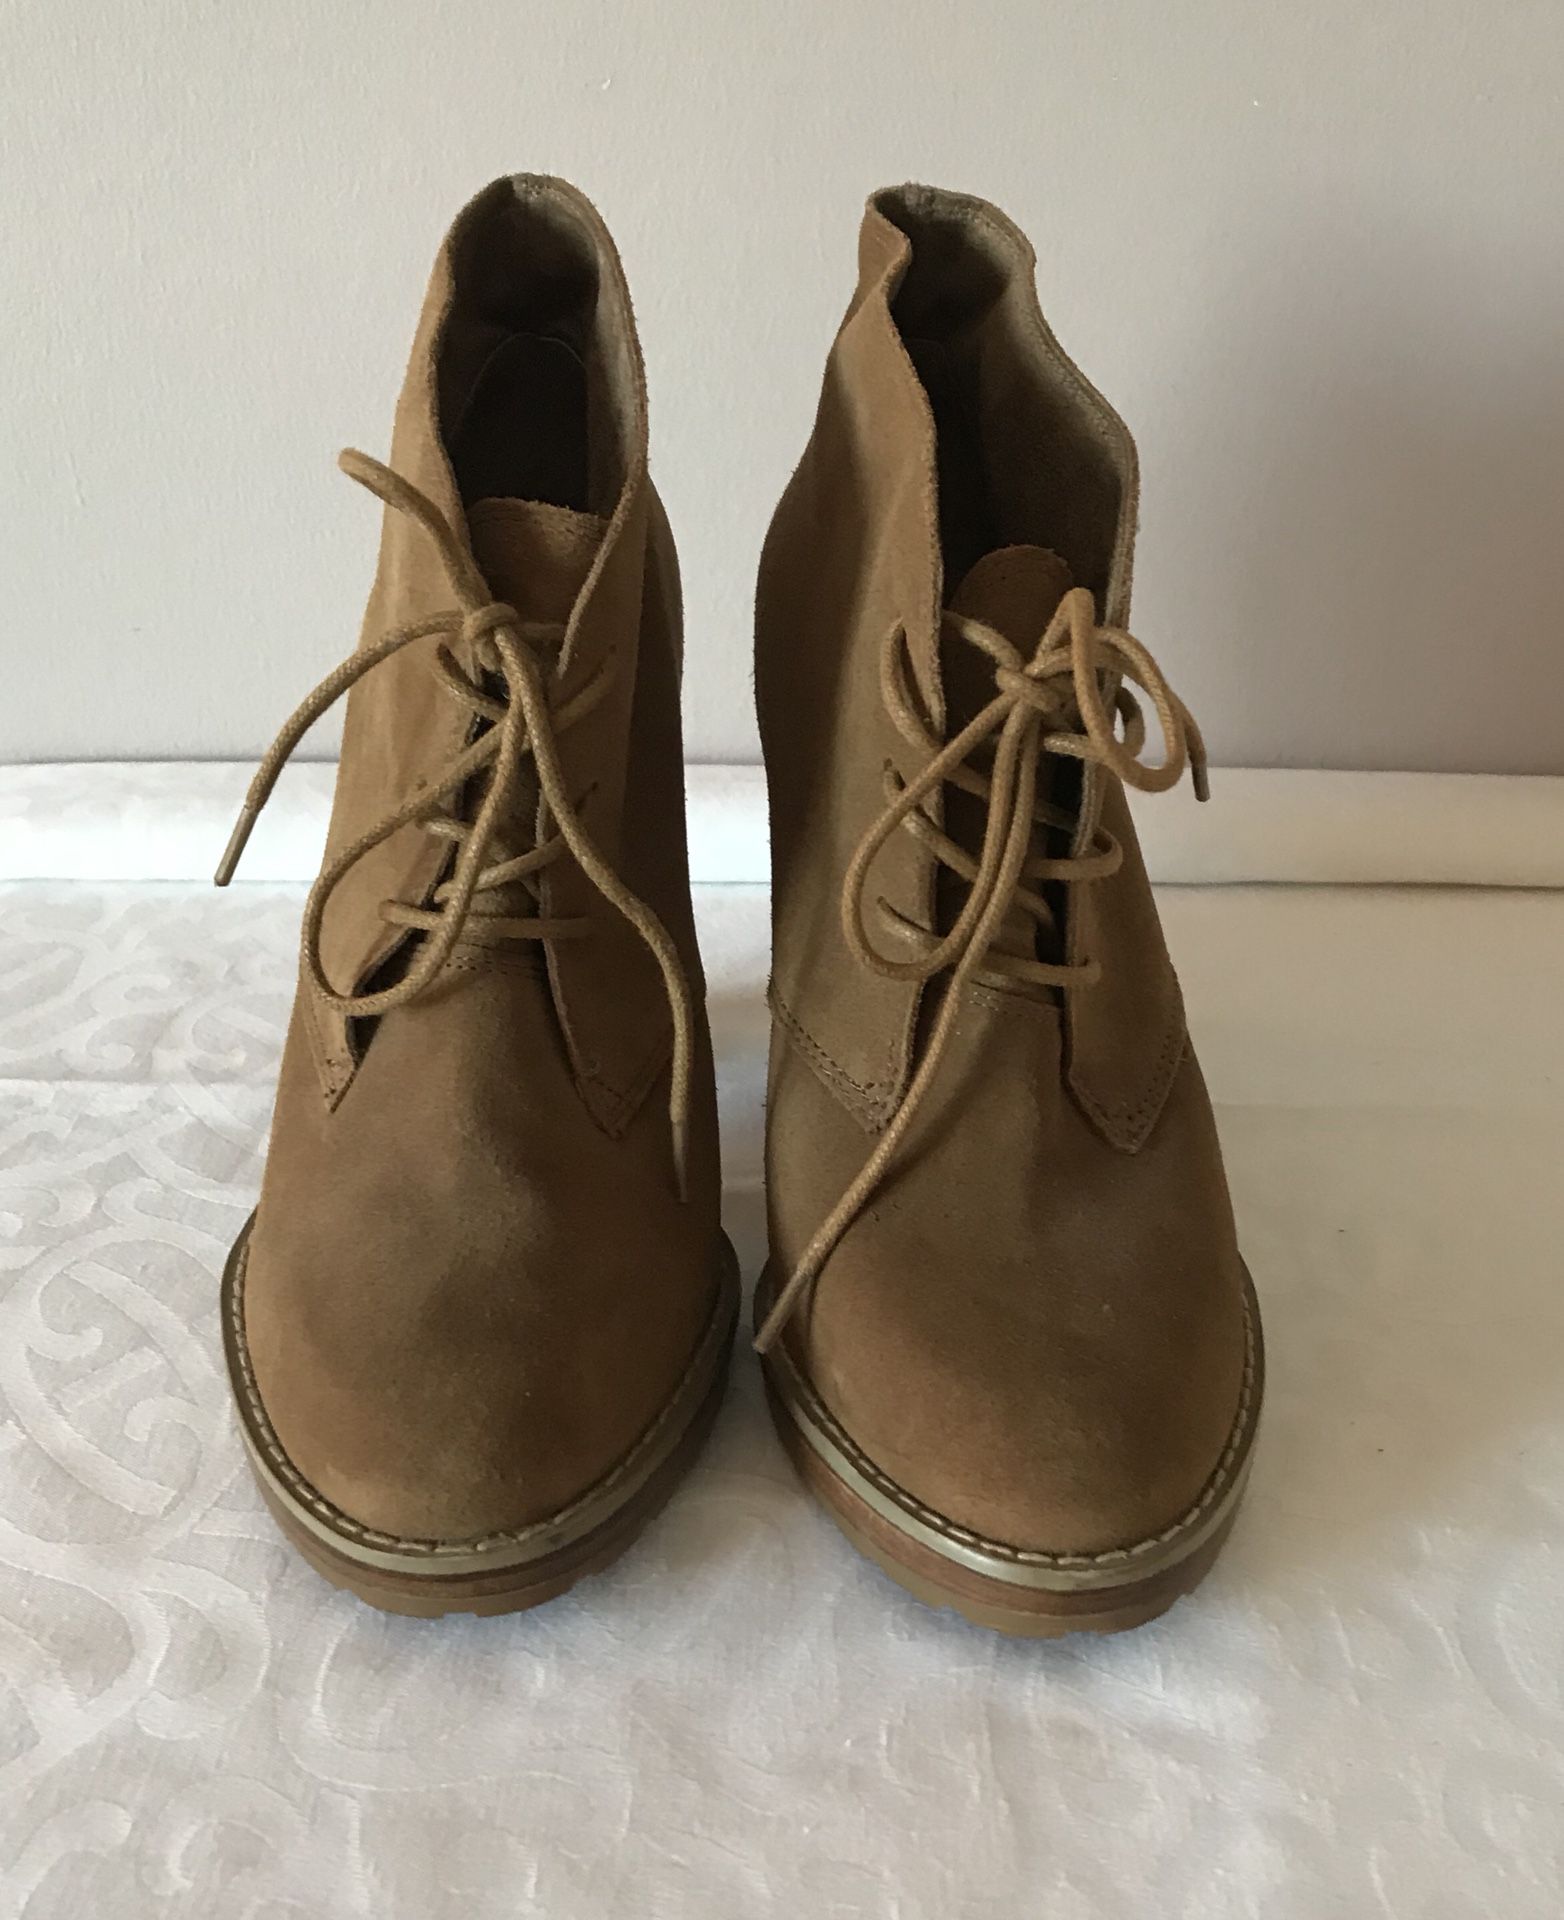 ALDO Women’s Suede Ankle Boots, size 10